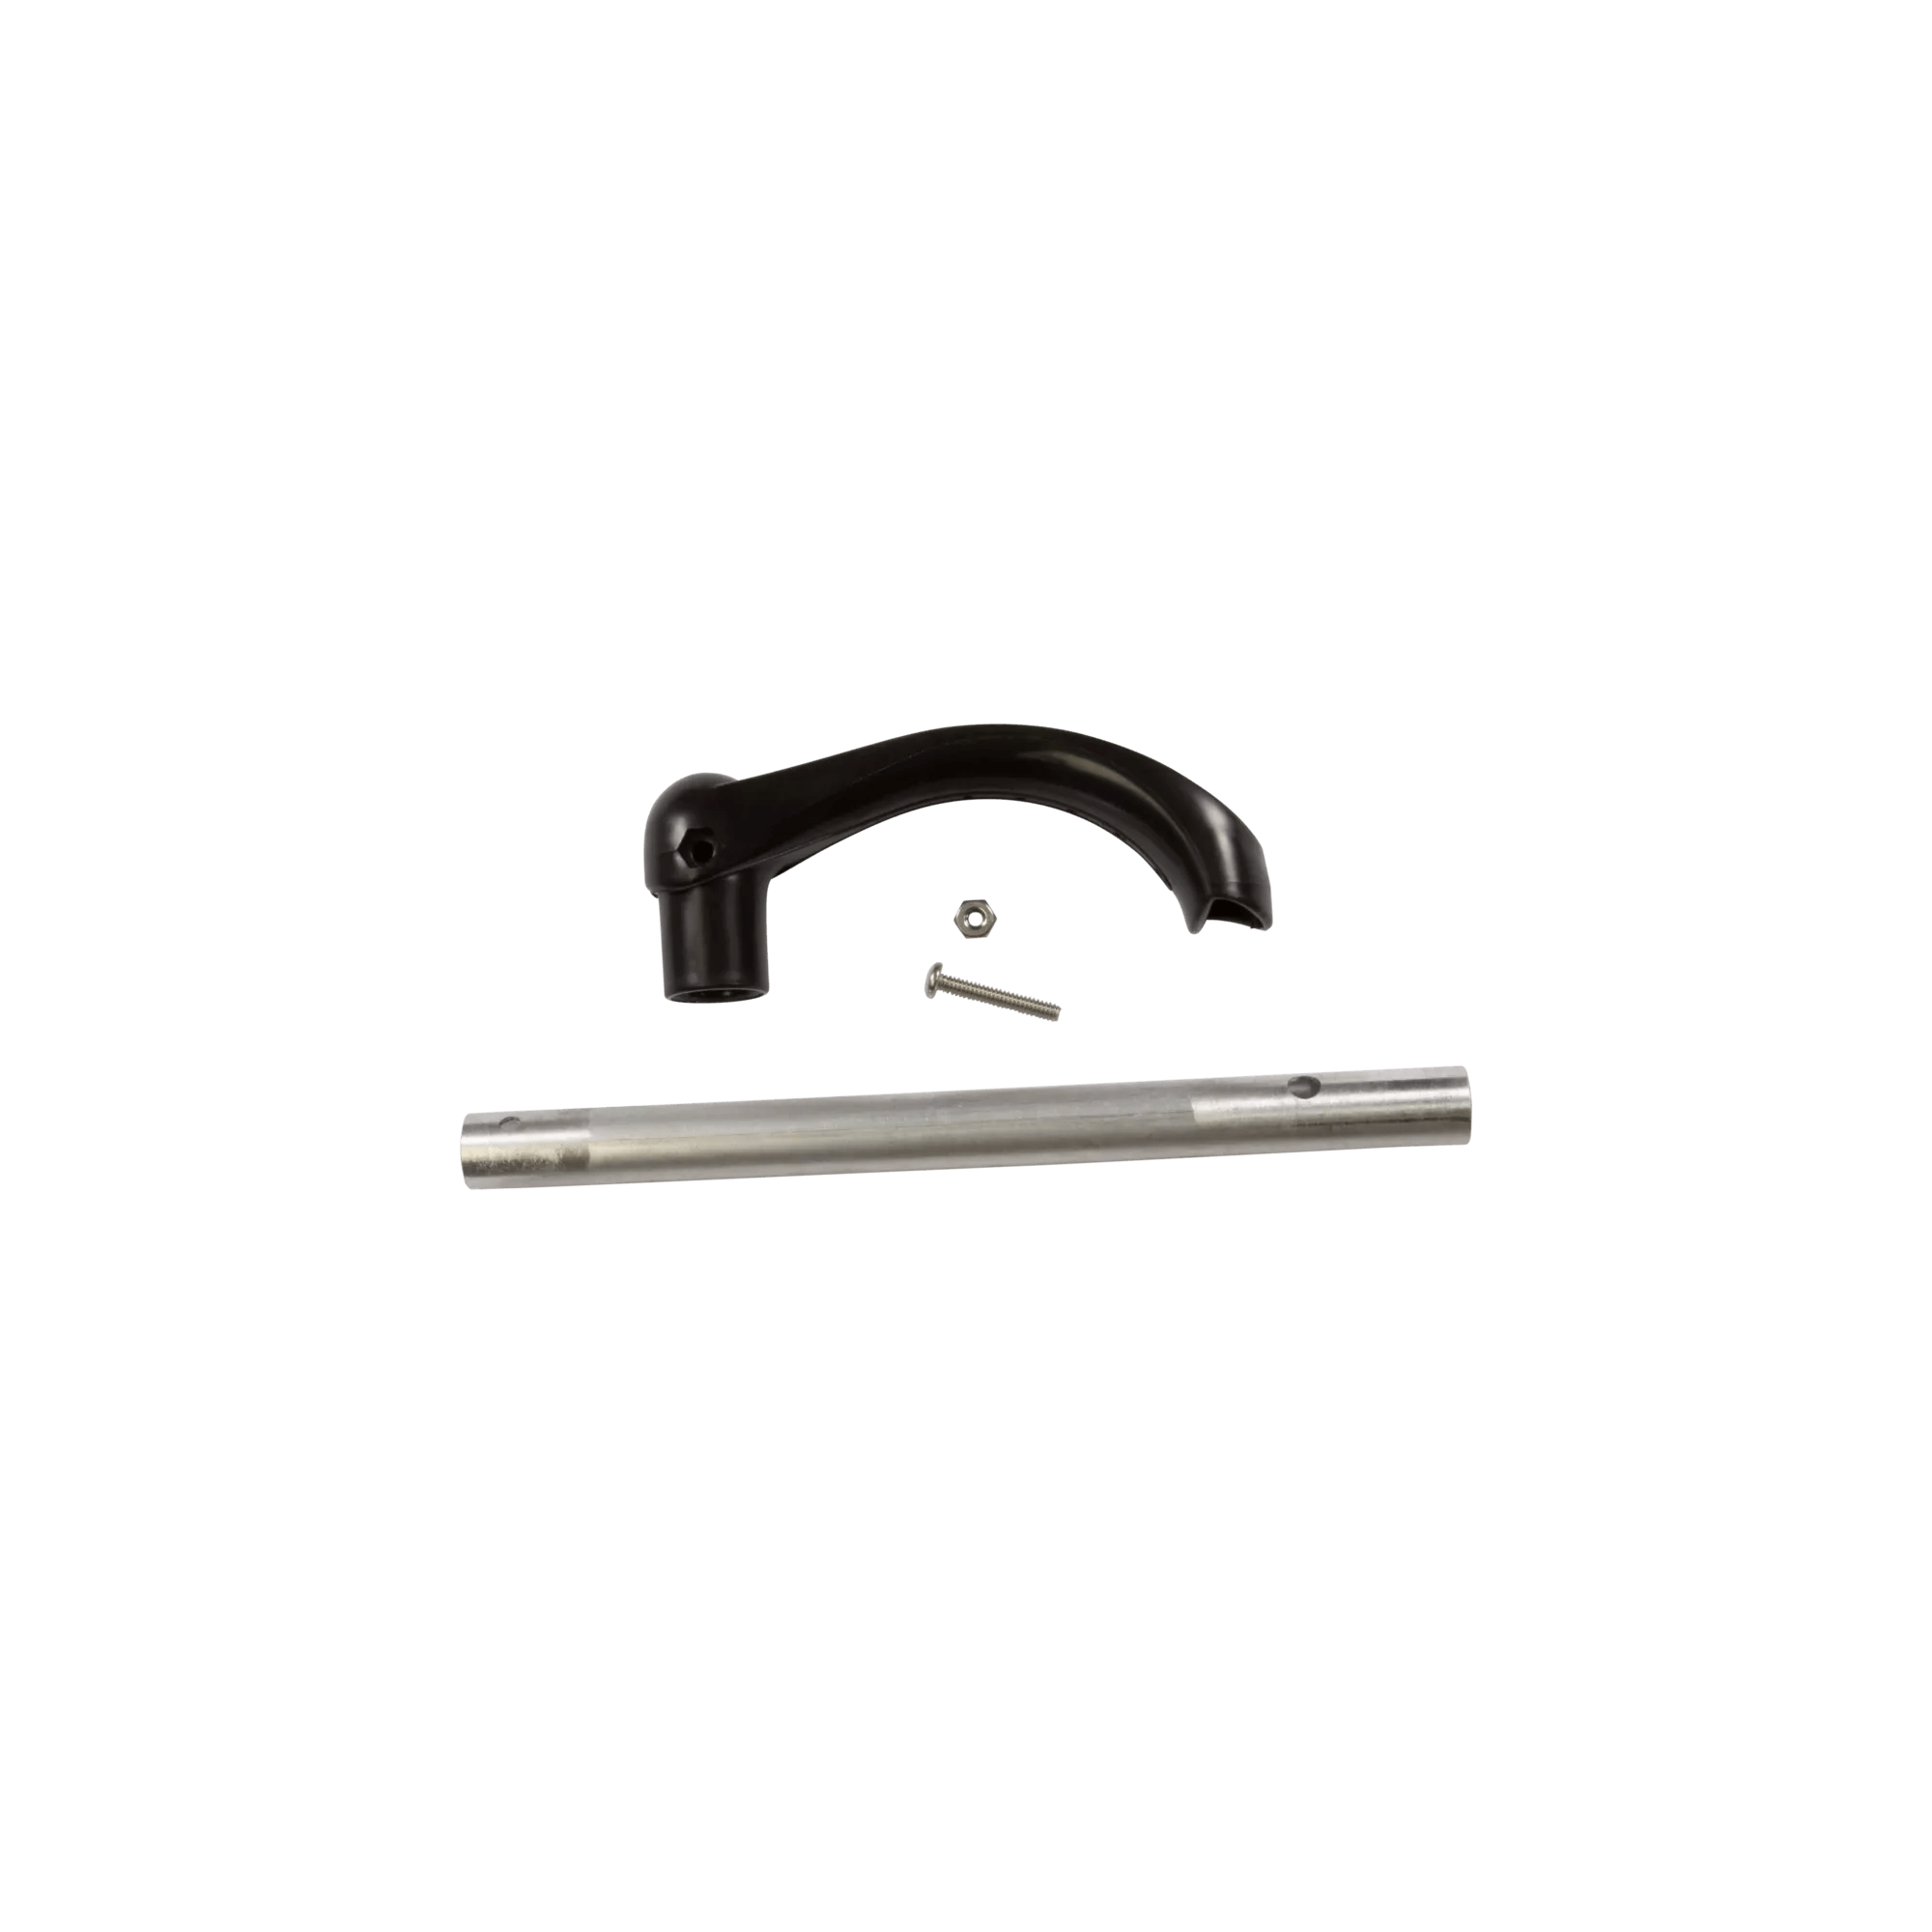 PELICAN - Pedal Boat Steering Kit in Black -  - PS0638 - 